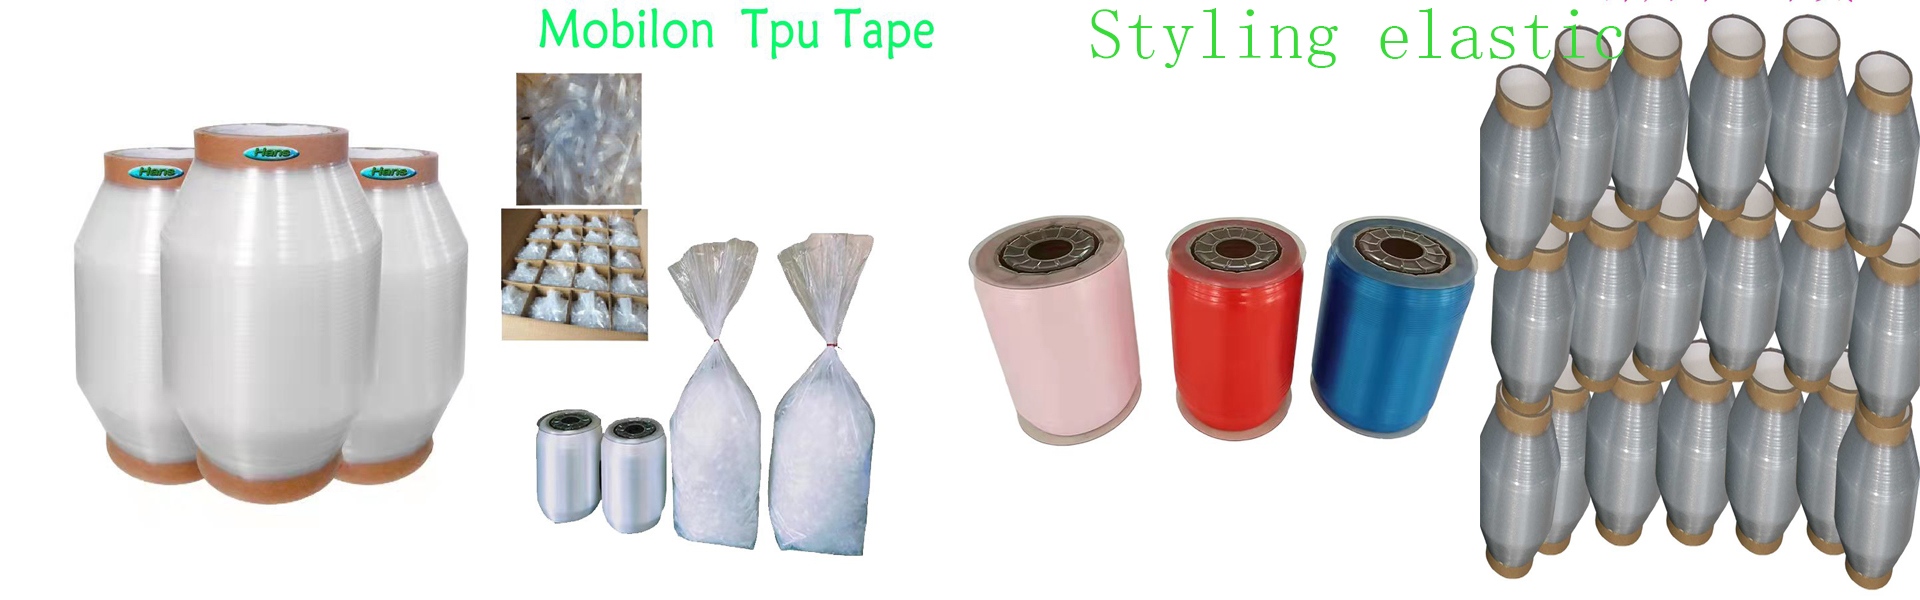 nastro mobilone, tracolla trasparente, pellicola TPU,Dongguan Changan Tusheng Garment Accessories Co., Ltd.